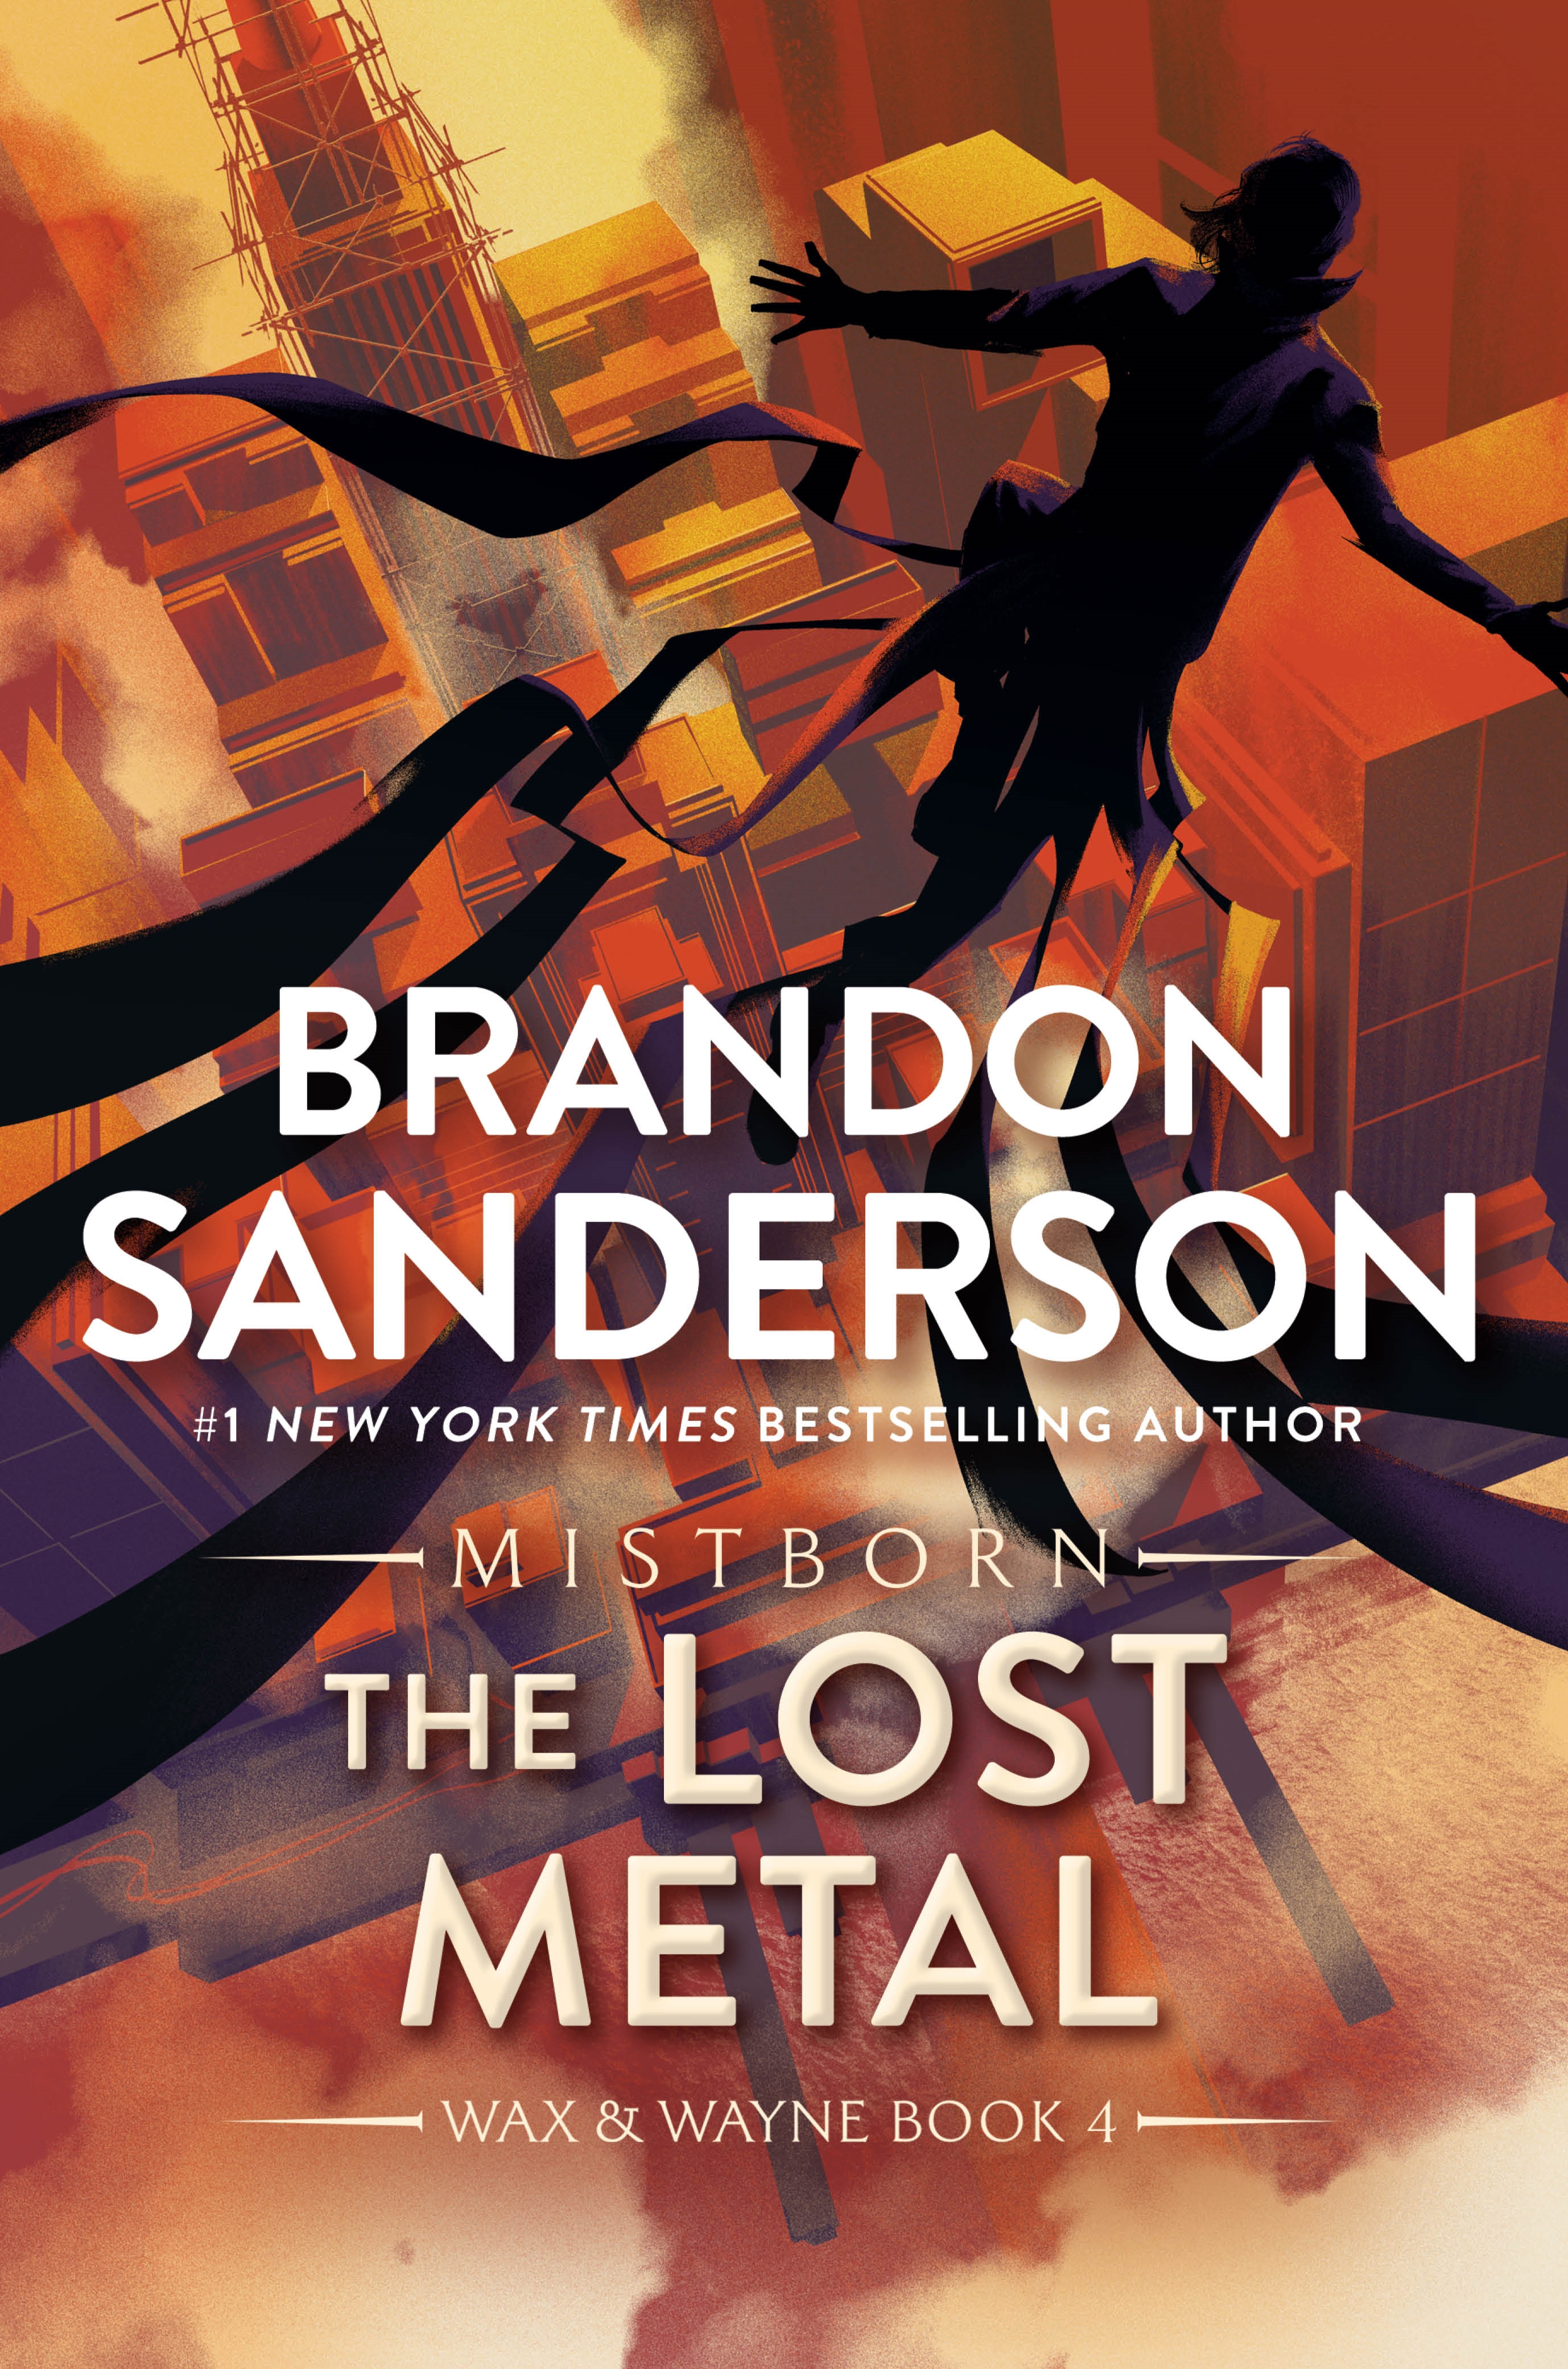 The Lost Metal : A Mistborn Novel by Brandon Sanderson